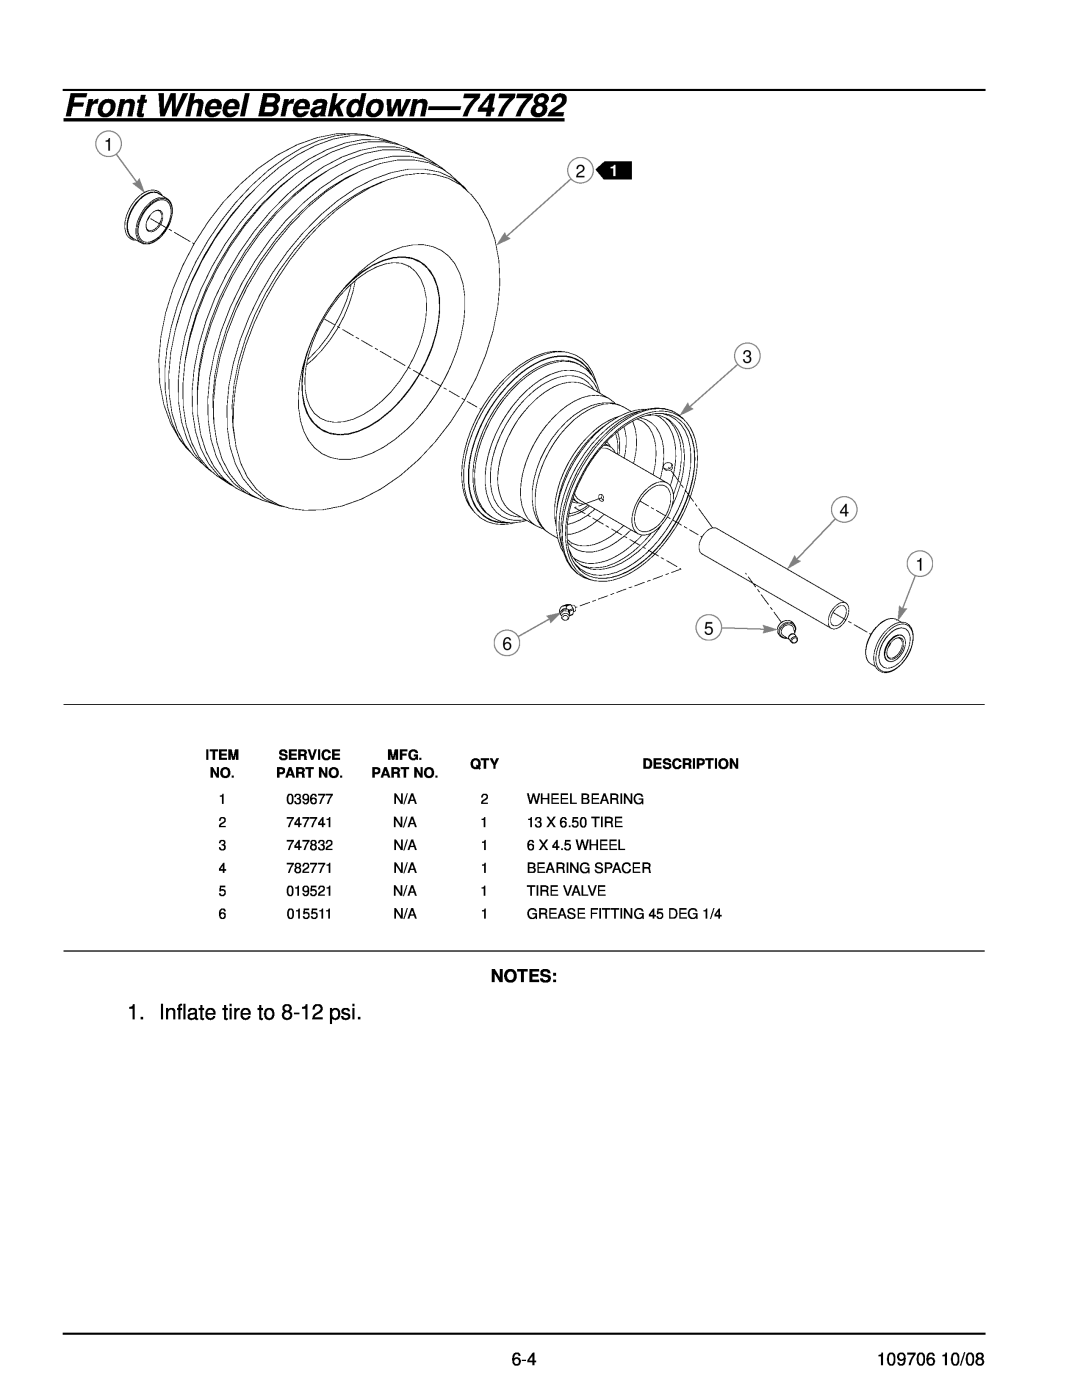 Hustler Turf Diesel Z manual Front Wheel Breakdown-747782, Inflate tire to 8-12 psi, Service, Description 